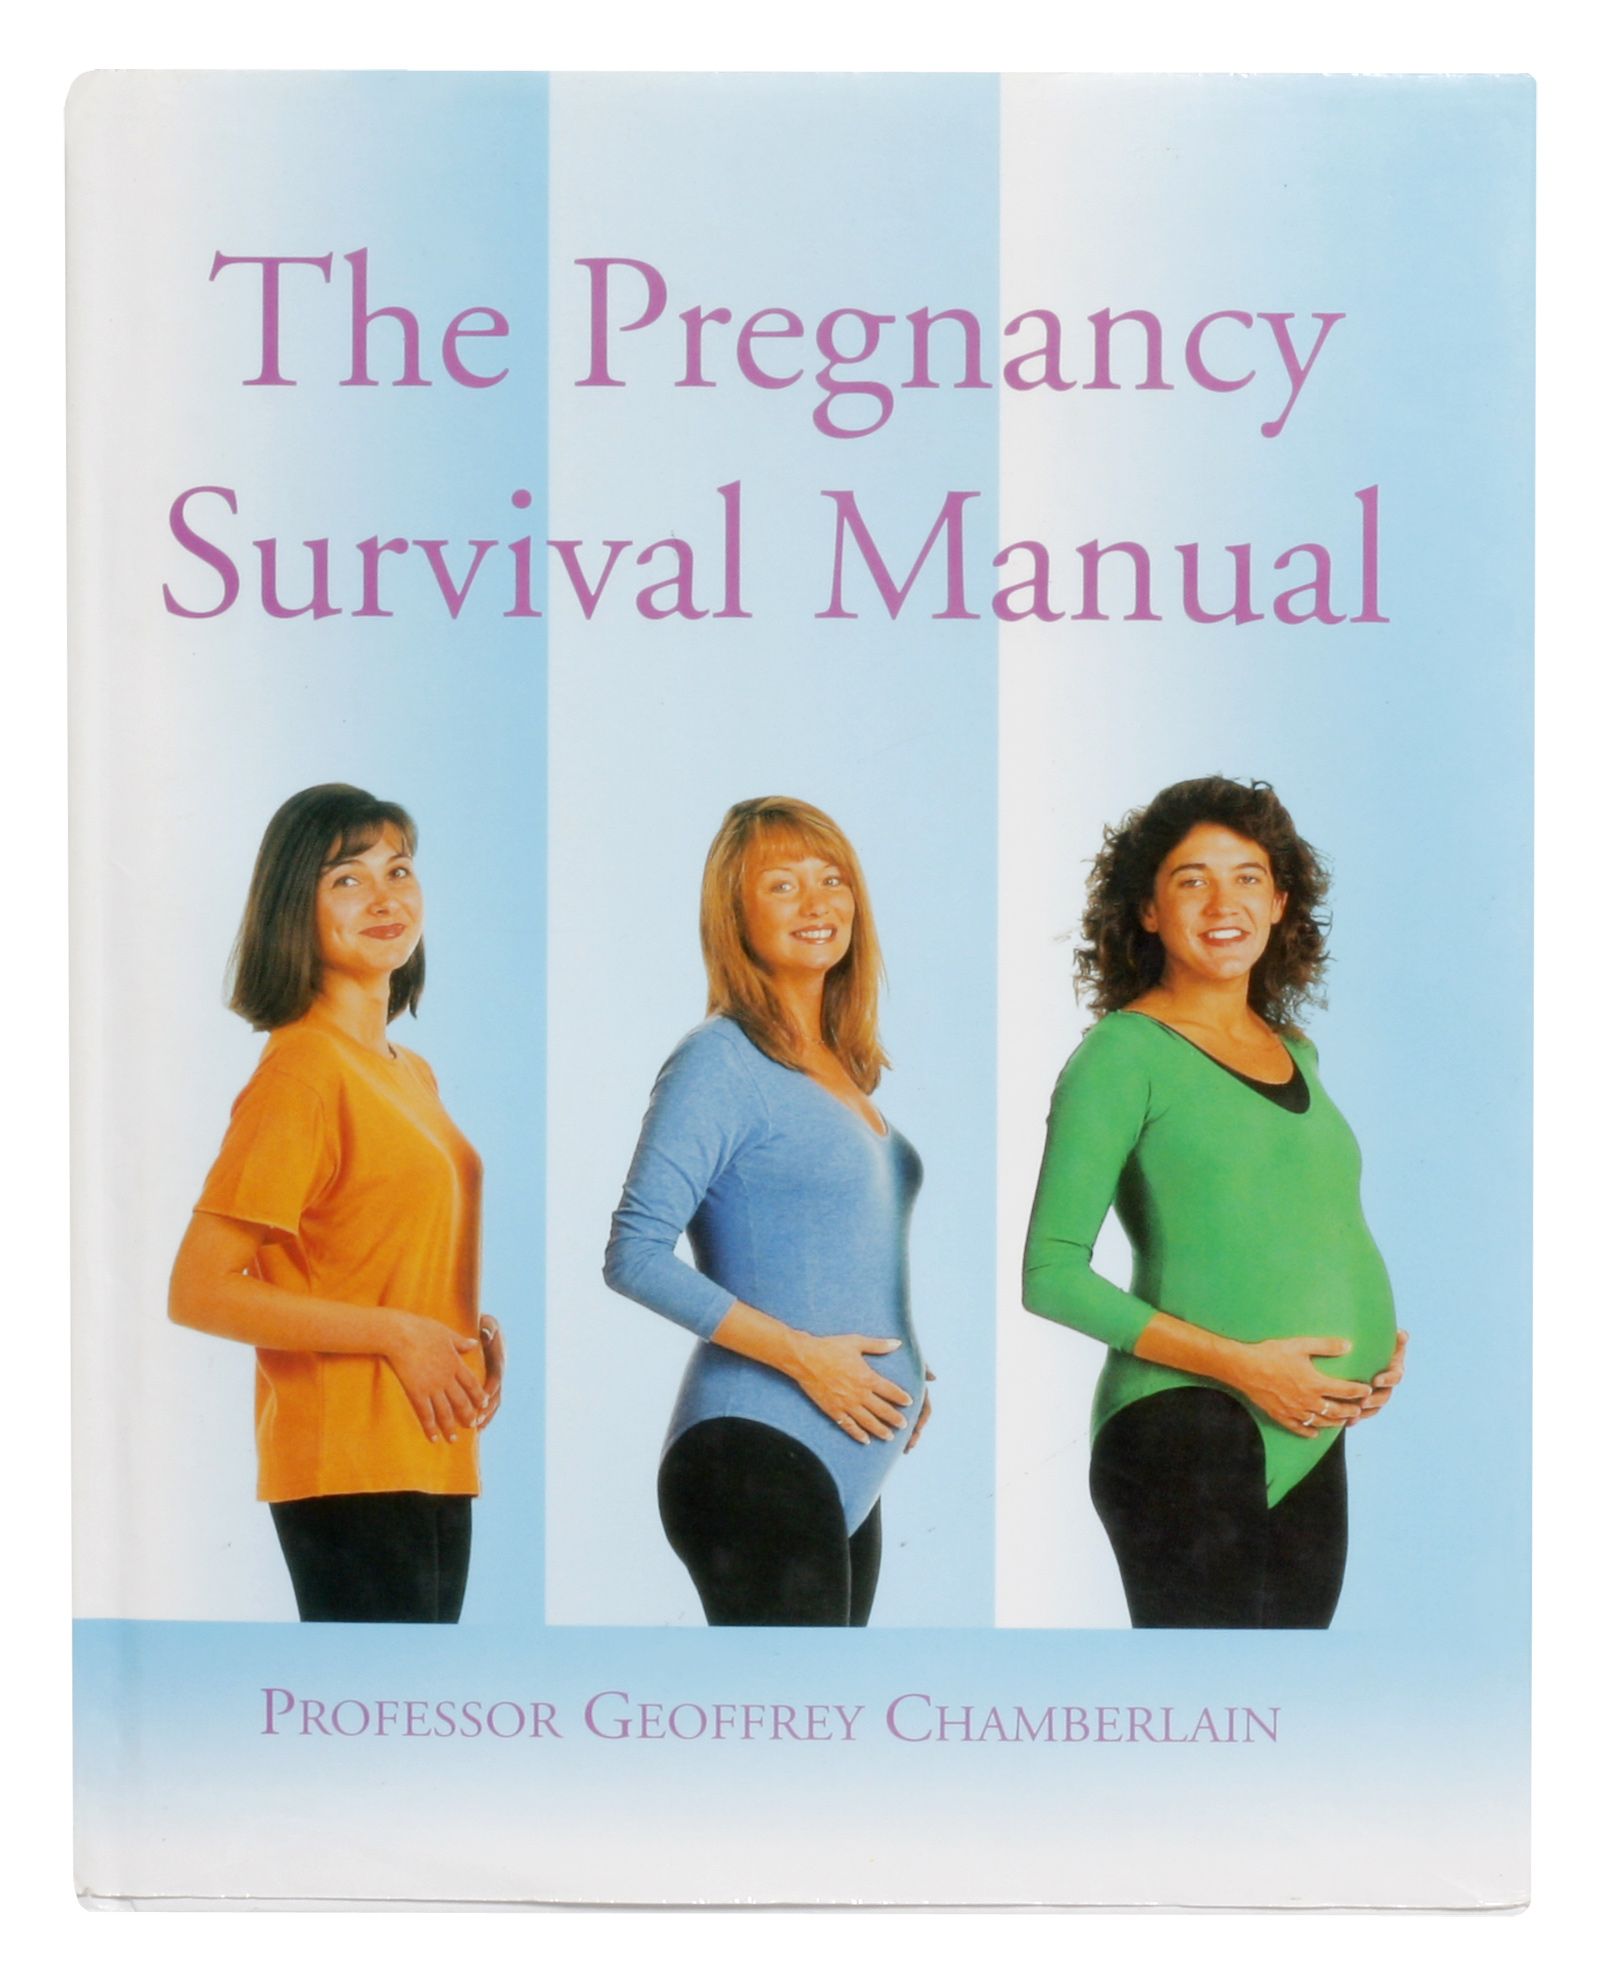 The Pregnancy Survival Manual